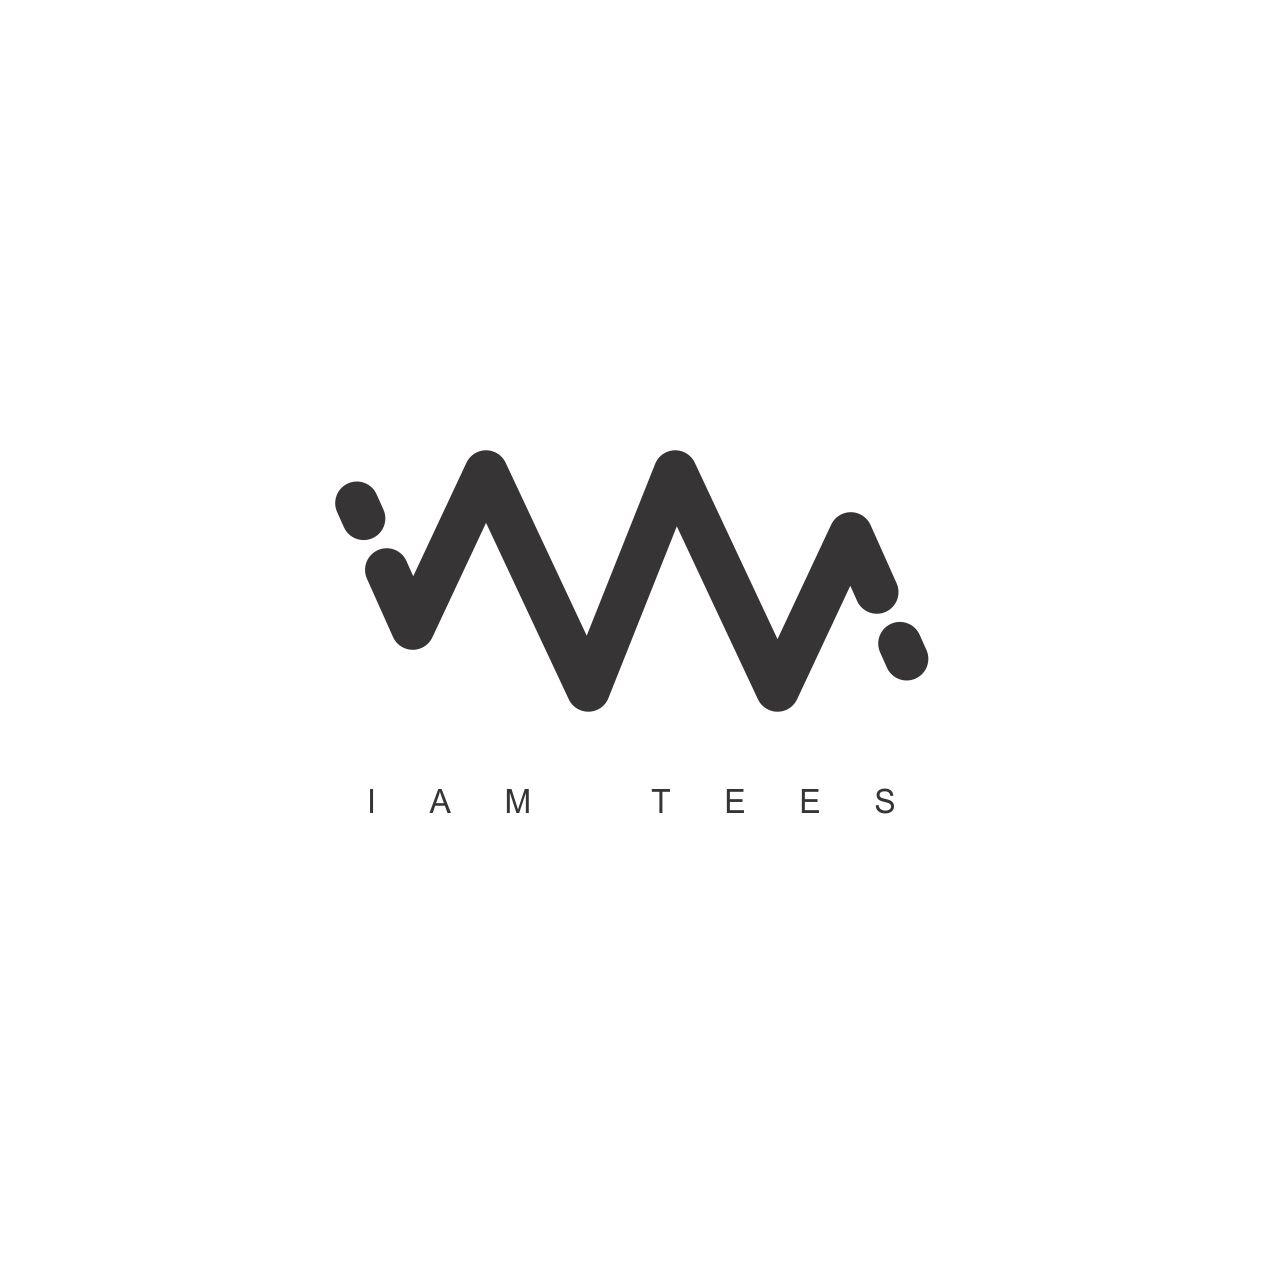 I AM Logo - DesignContest Am (Tees) I Am Tees